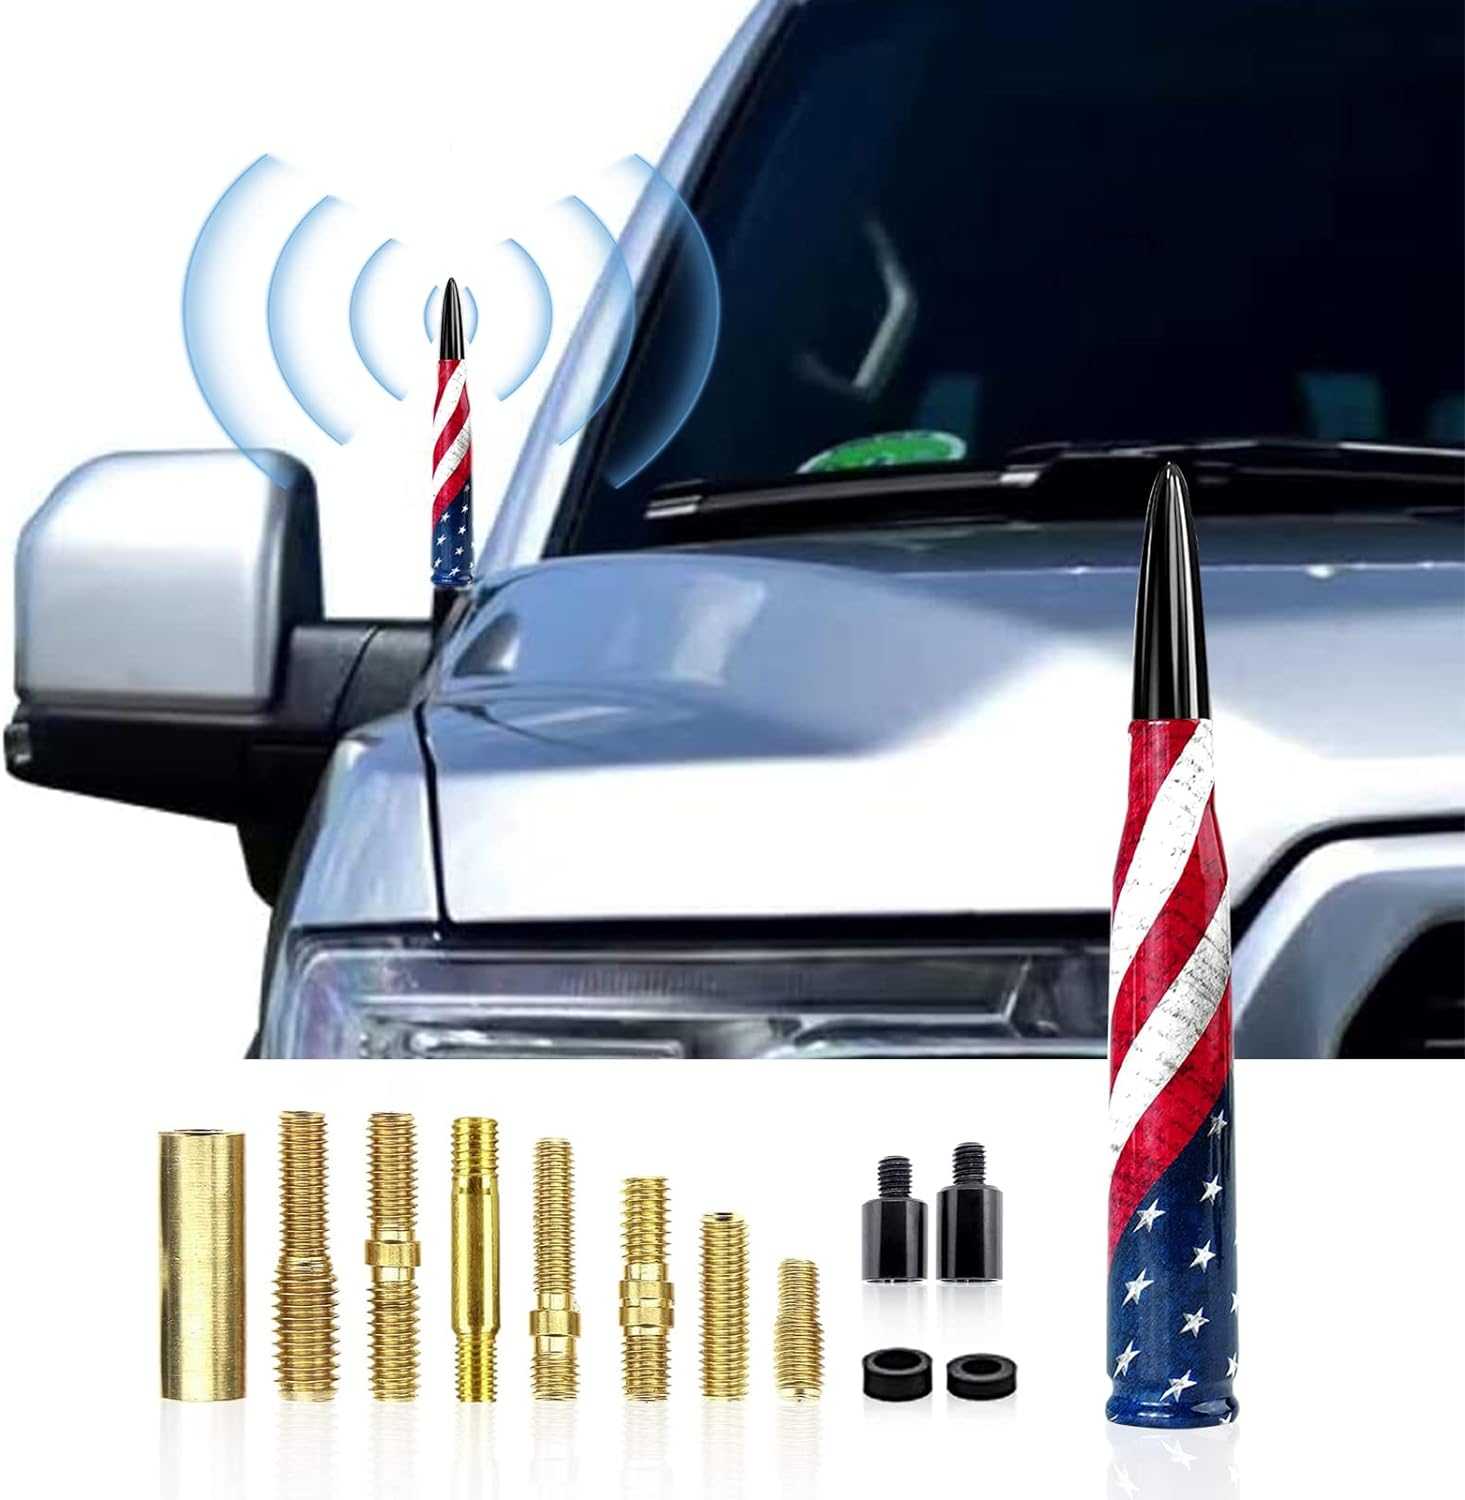 Ajxn 1 PC Car Truck Bullet Antenna American Flag Design Compatible with F150 F250 F350 Super Chevrolet Duty Raptor Dodge Ram 1500 25